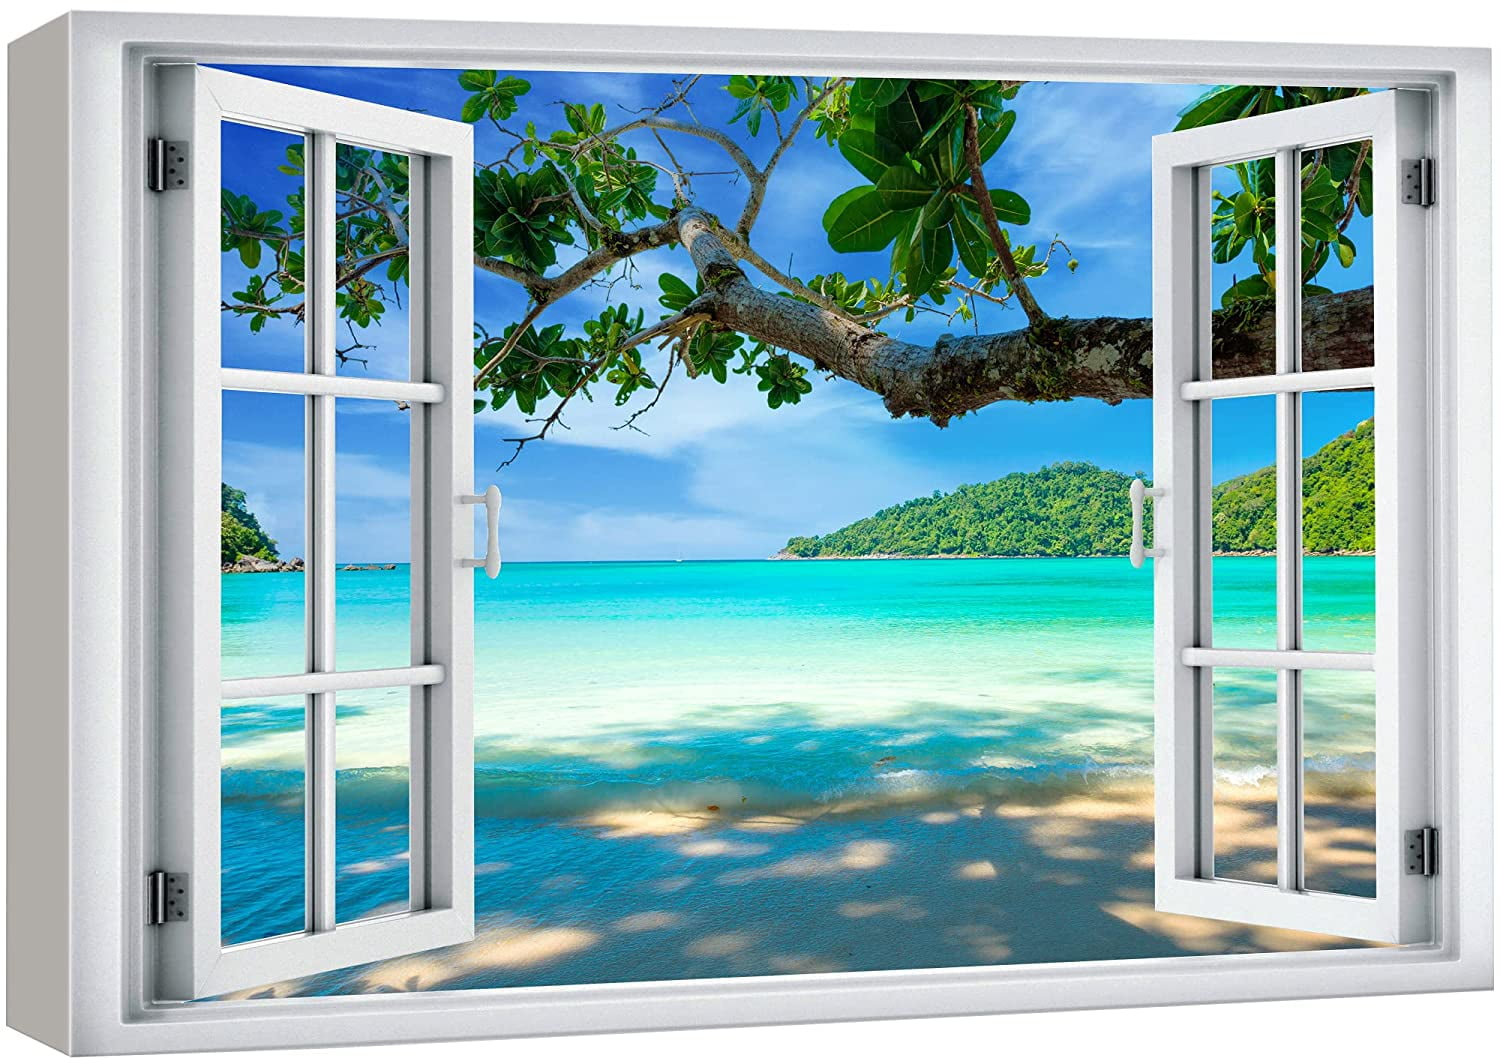 PARADISE BEACH SEA 3D Window View Canvas Wall Art Picture Large  W143 MATAGA 